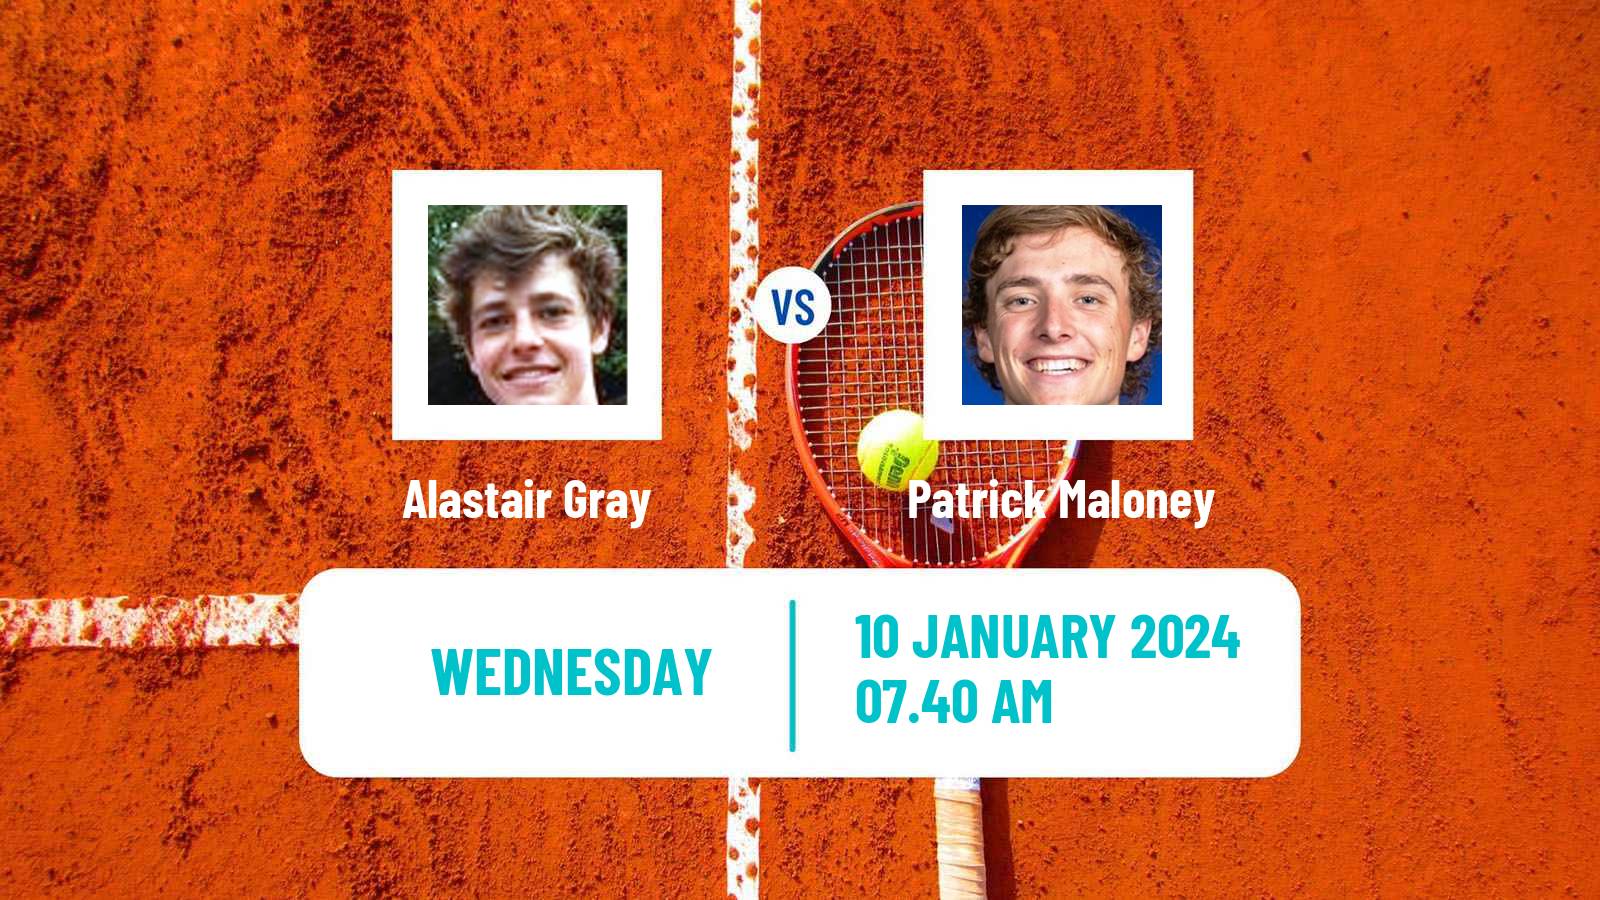 Tennis ITF M25 Loughborough Men Alastair Gray - Patrick Maloney